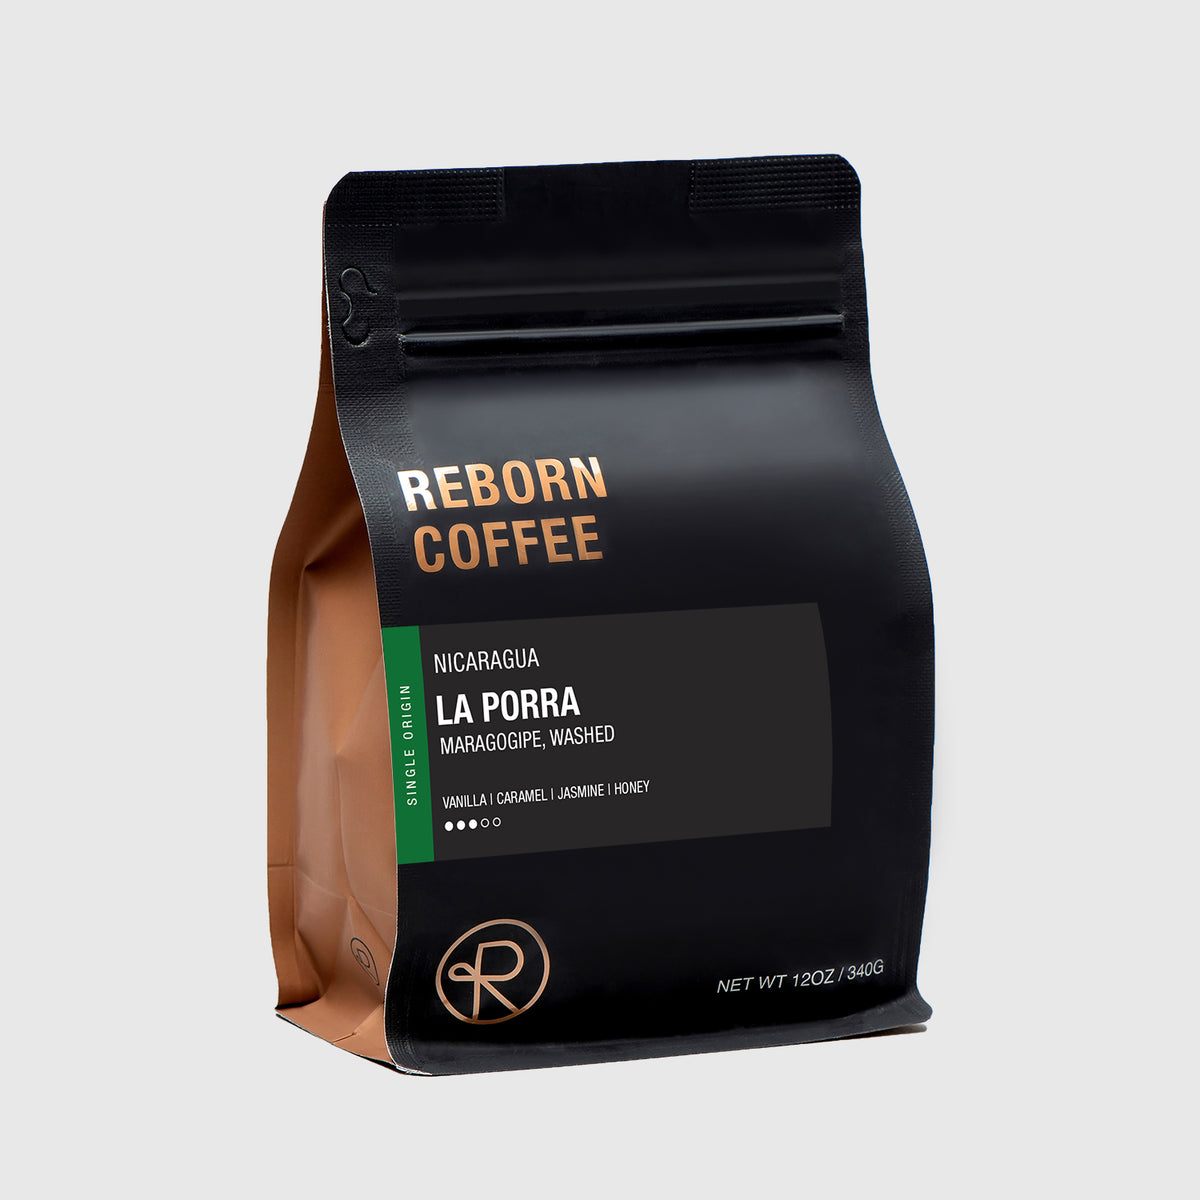 Reborn Coffee Grand Opening